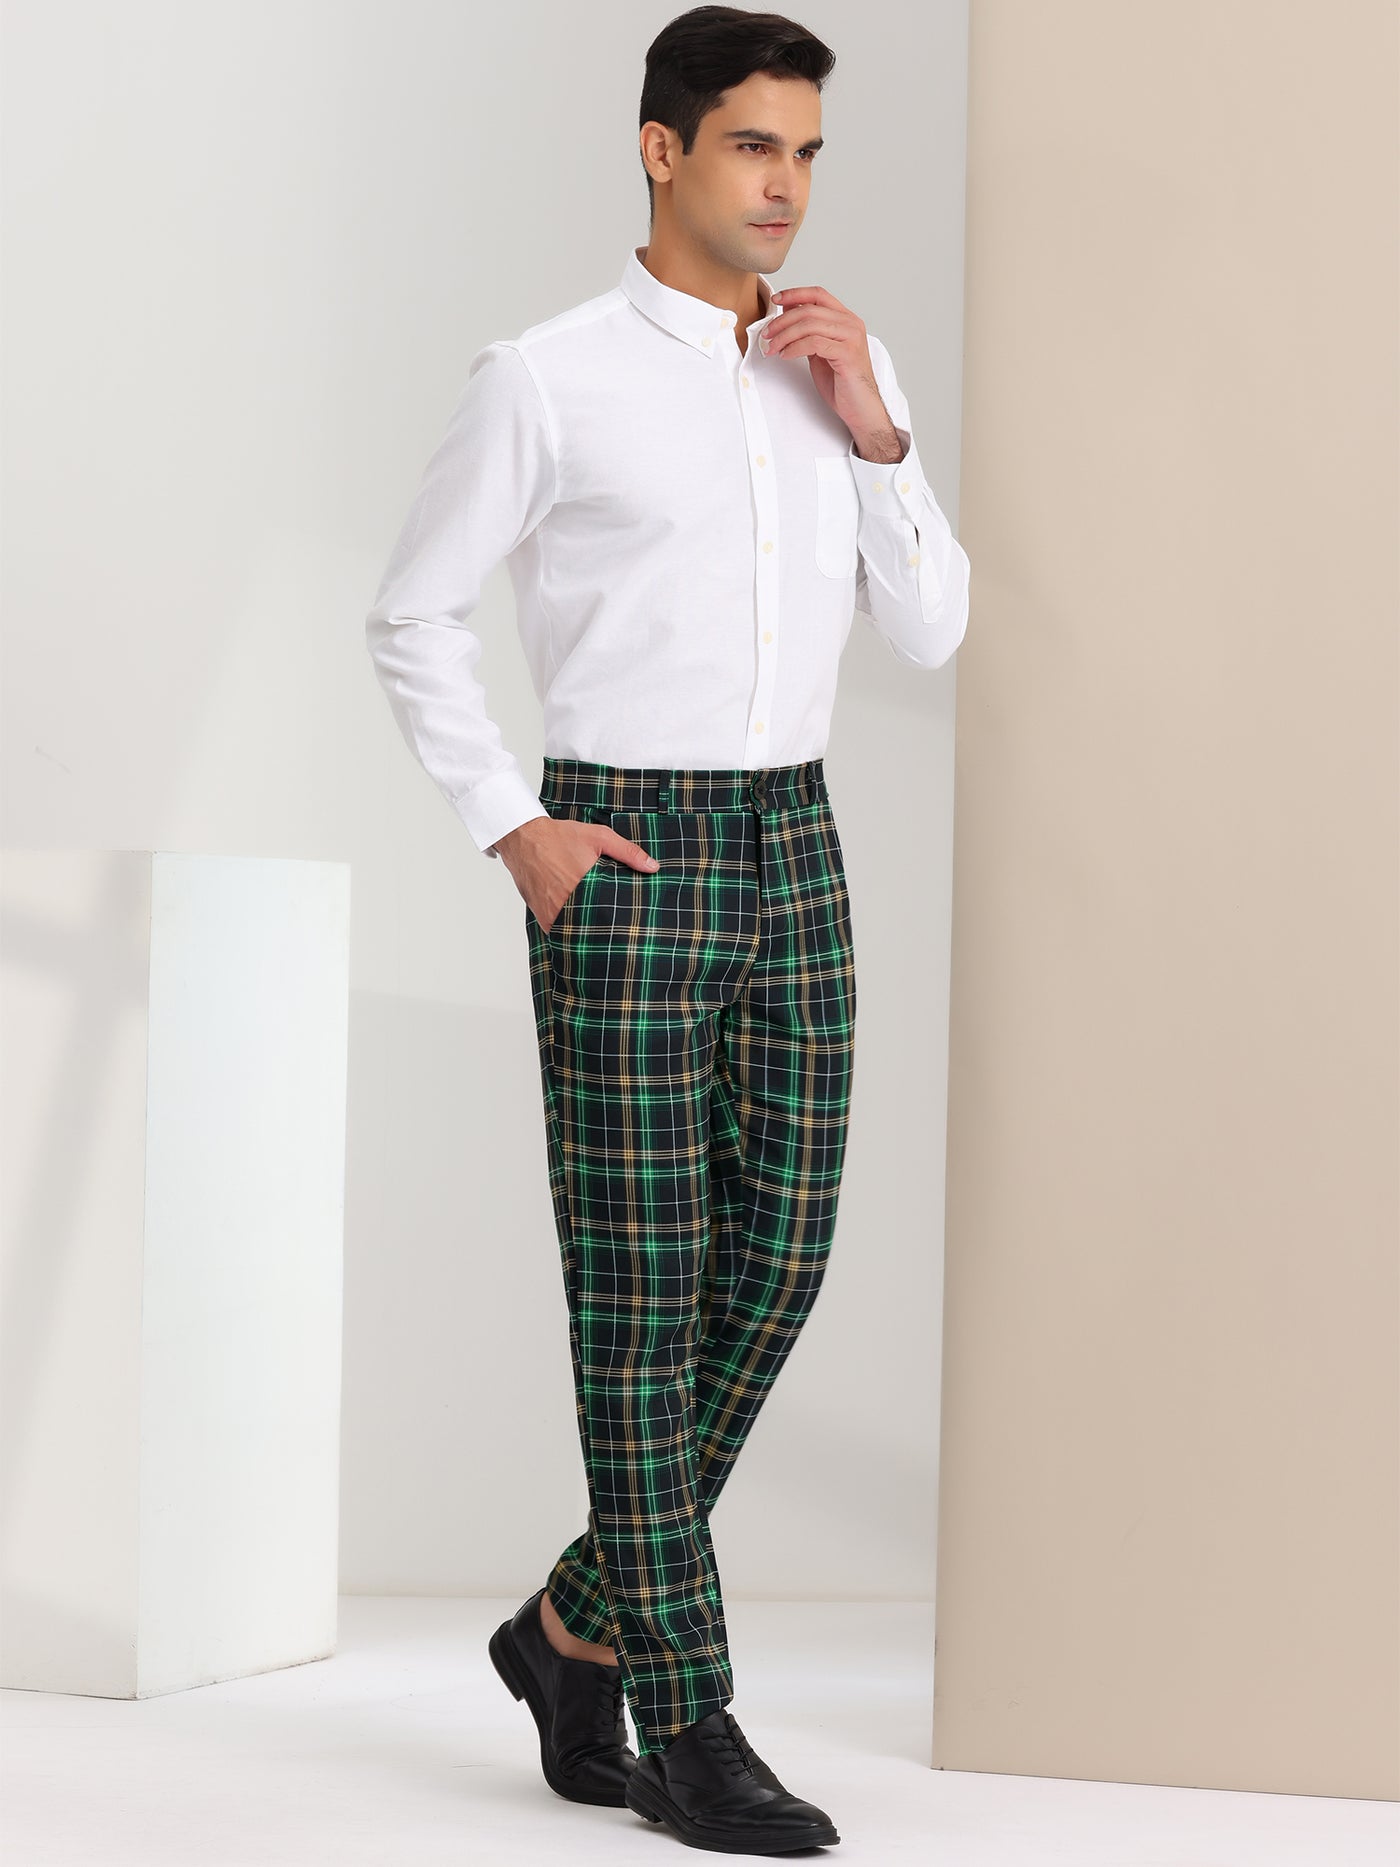 Bublédon Men's Plaid Slacks Regular Fit Flat Front Work Prom Checked Pants